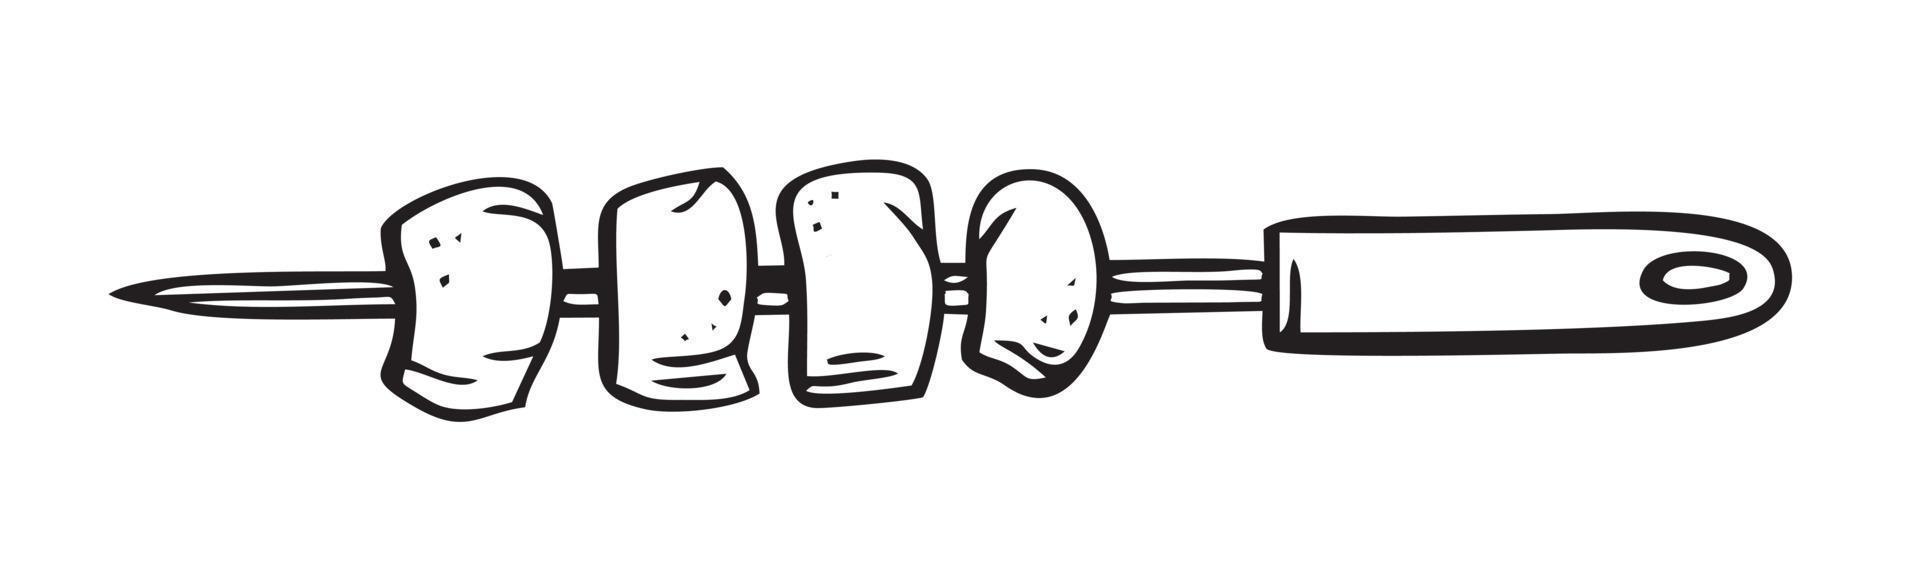 parrilla de pincho de barbacoa dibujada a mano. restaurantes cocinando garabatos. ilustración vectorial vector